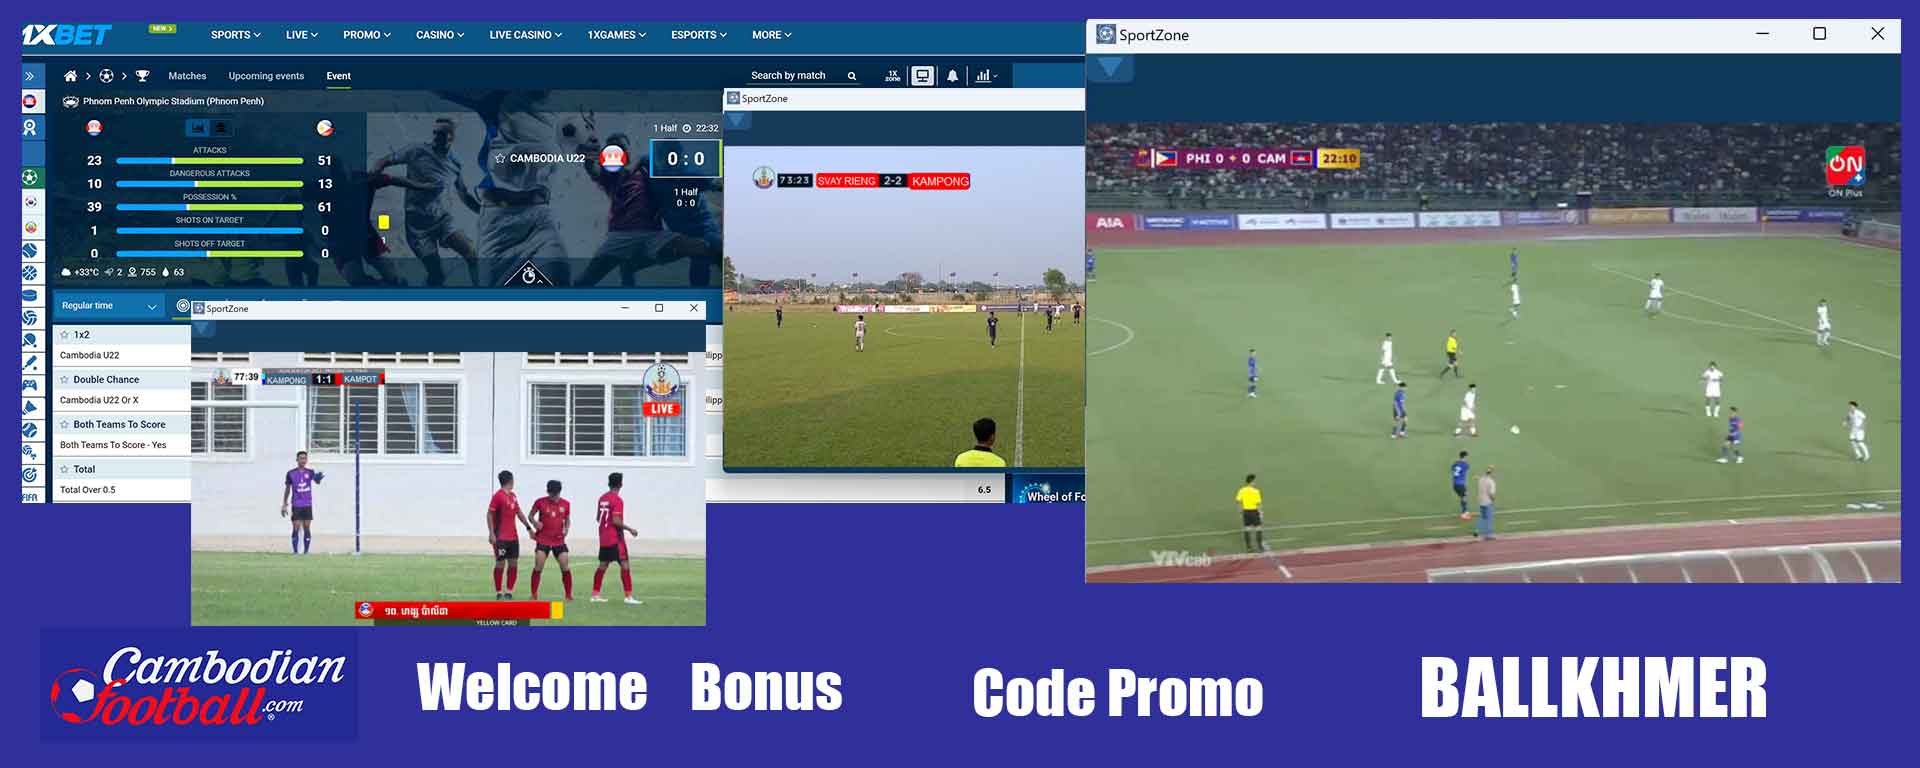 Regardez les matchs de football en direct maintenant gratuitement 1Xbet Cambodge Fooball